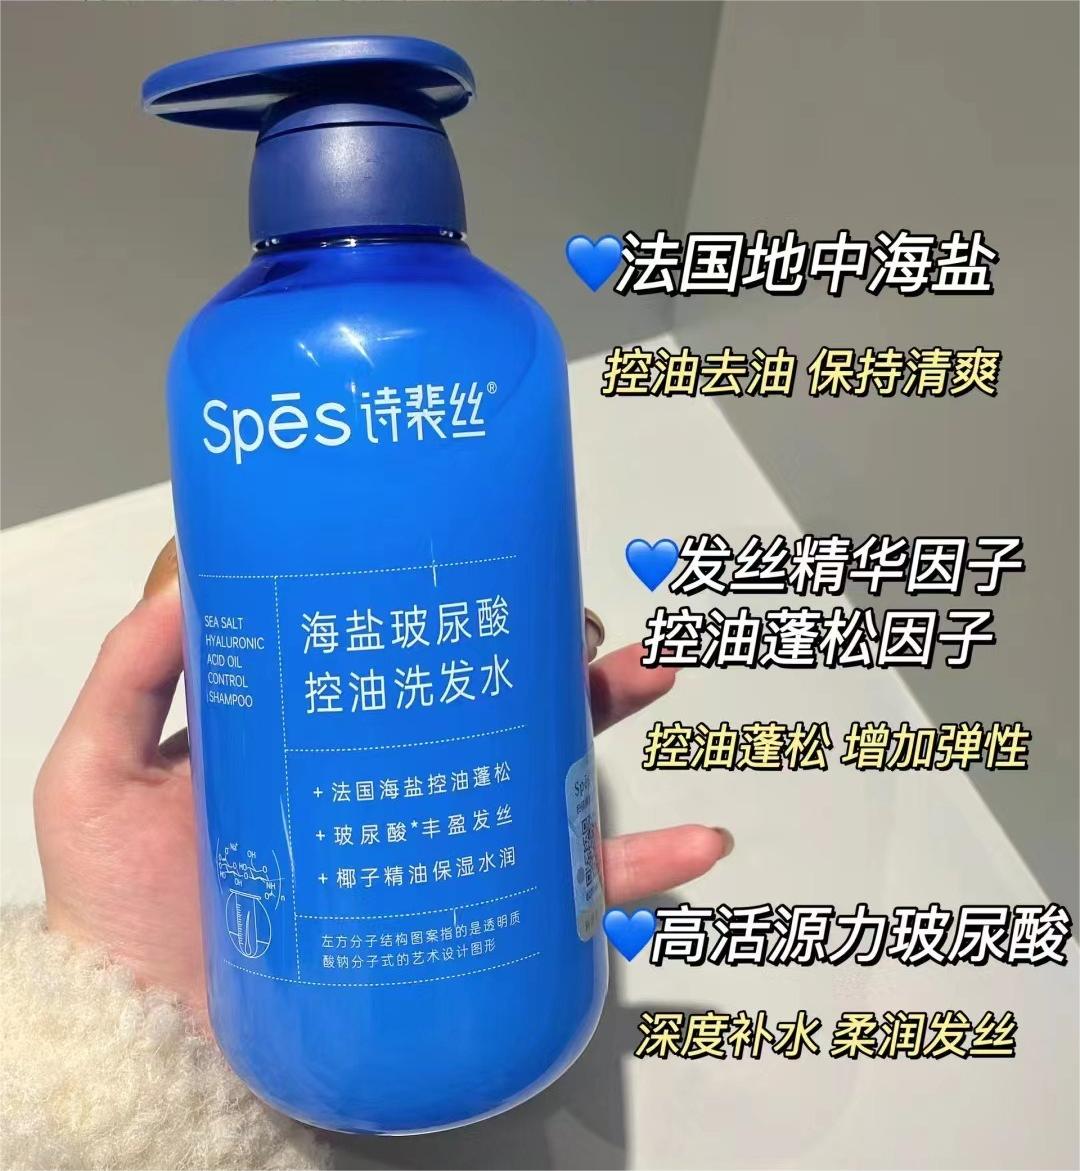 Spes Sea Salt Hyaluronic Acid Shampoo/Conditioner 500ml 诗裴丝海盐玻尿酸洗发水/护发素